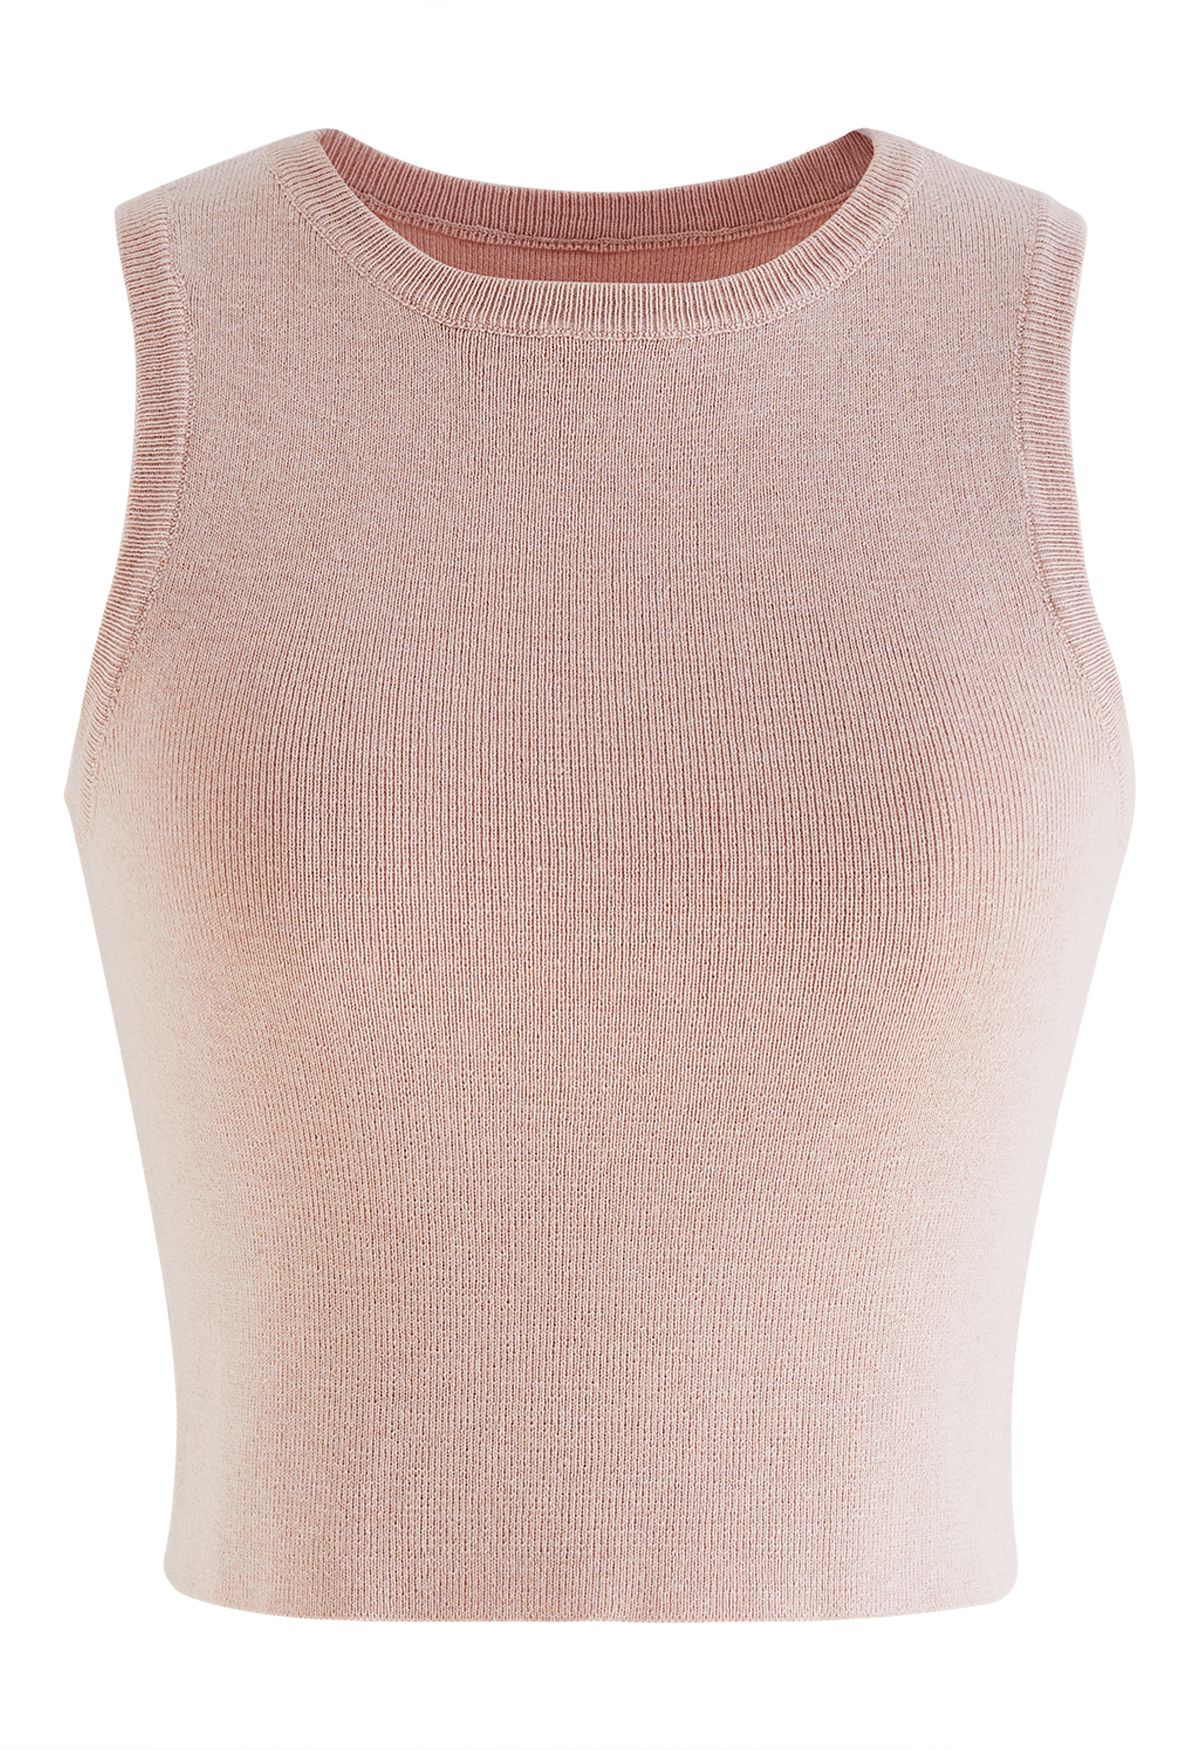 Camiseta sin mangas de punto Comfort Lithesome en rosa